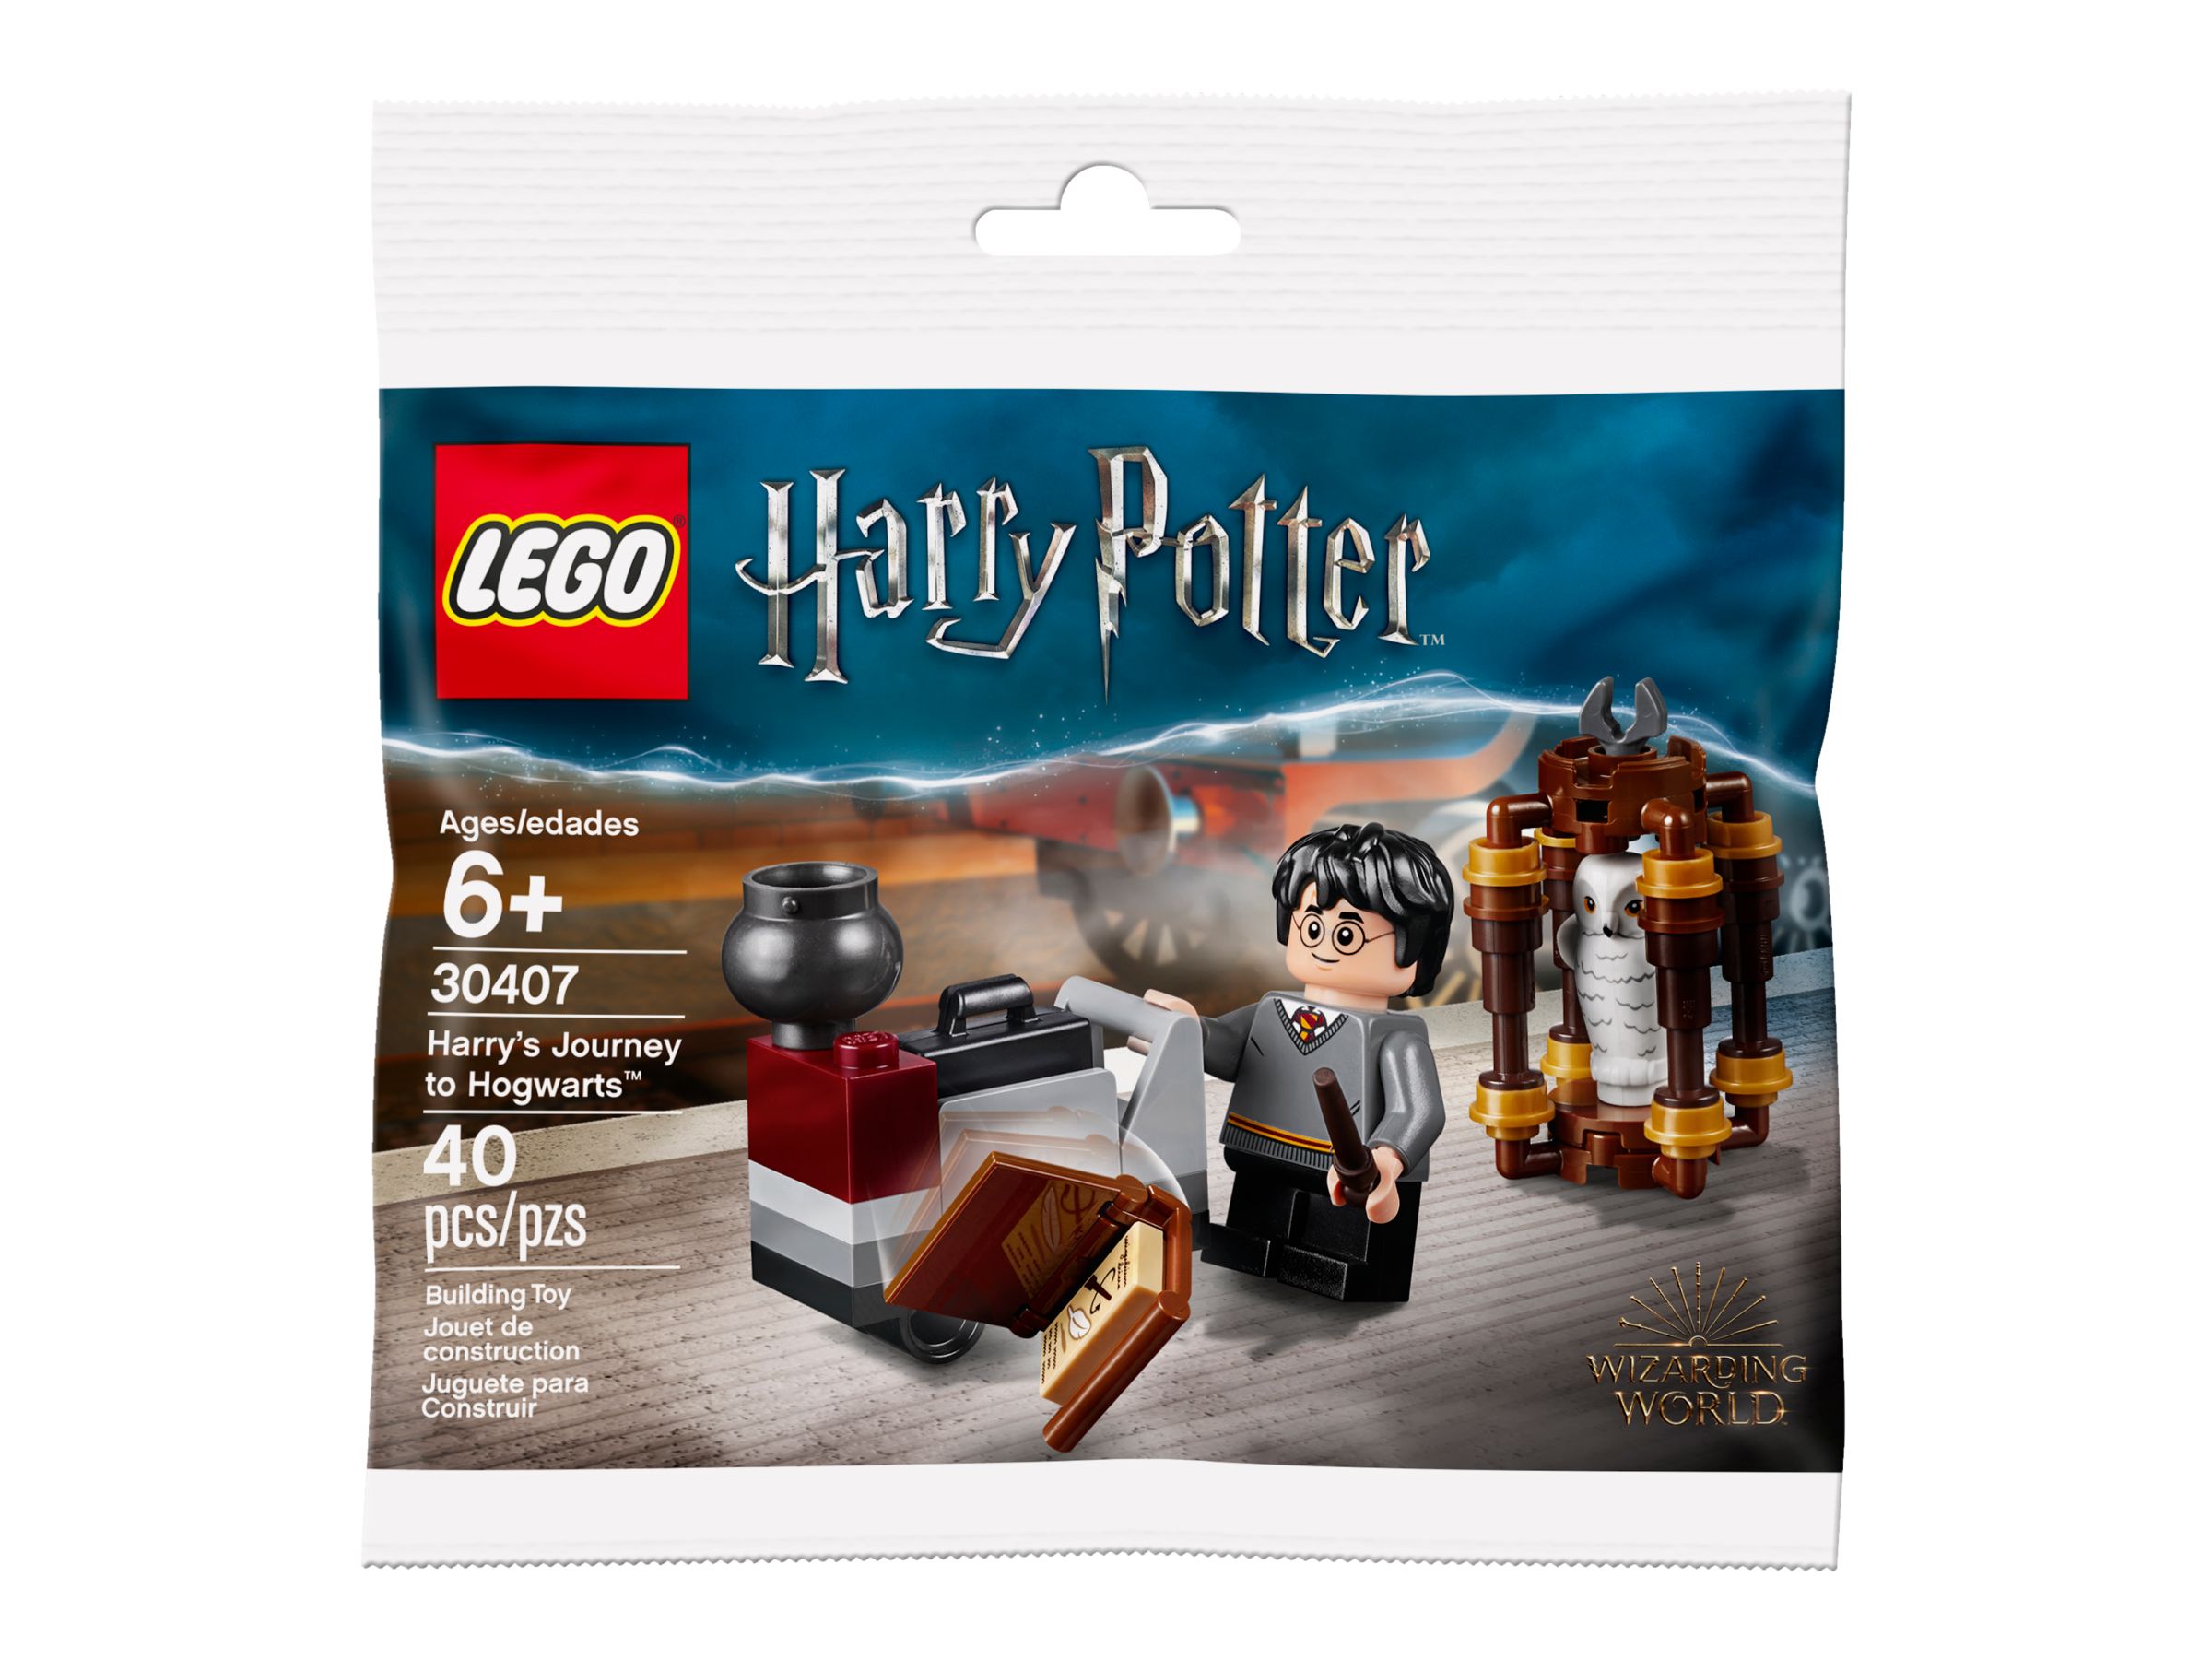 LEGO Harry Potter 30407 Harry's Reise nach Hogwarts™ LEGO_30407_alt2.jpg